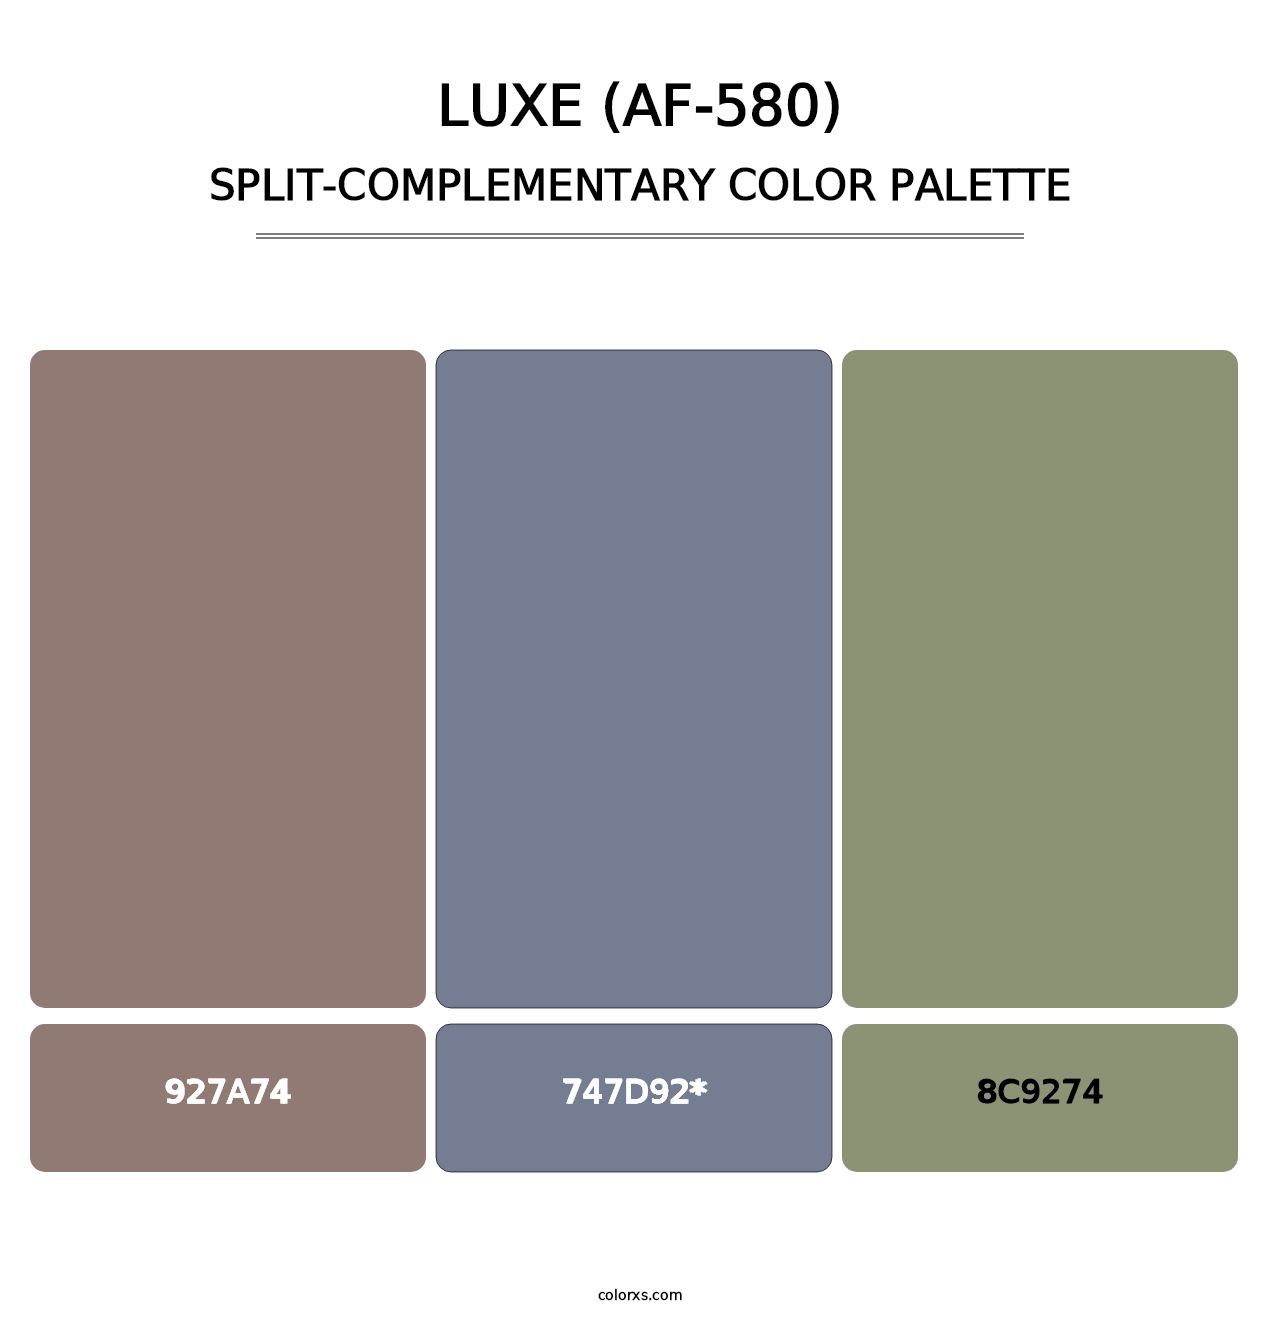 Luxe (AF-580) - Split-Complementary Color Palette